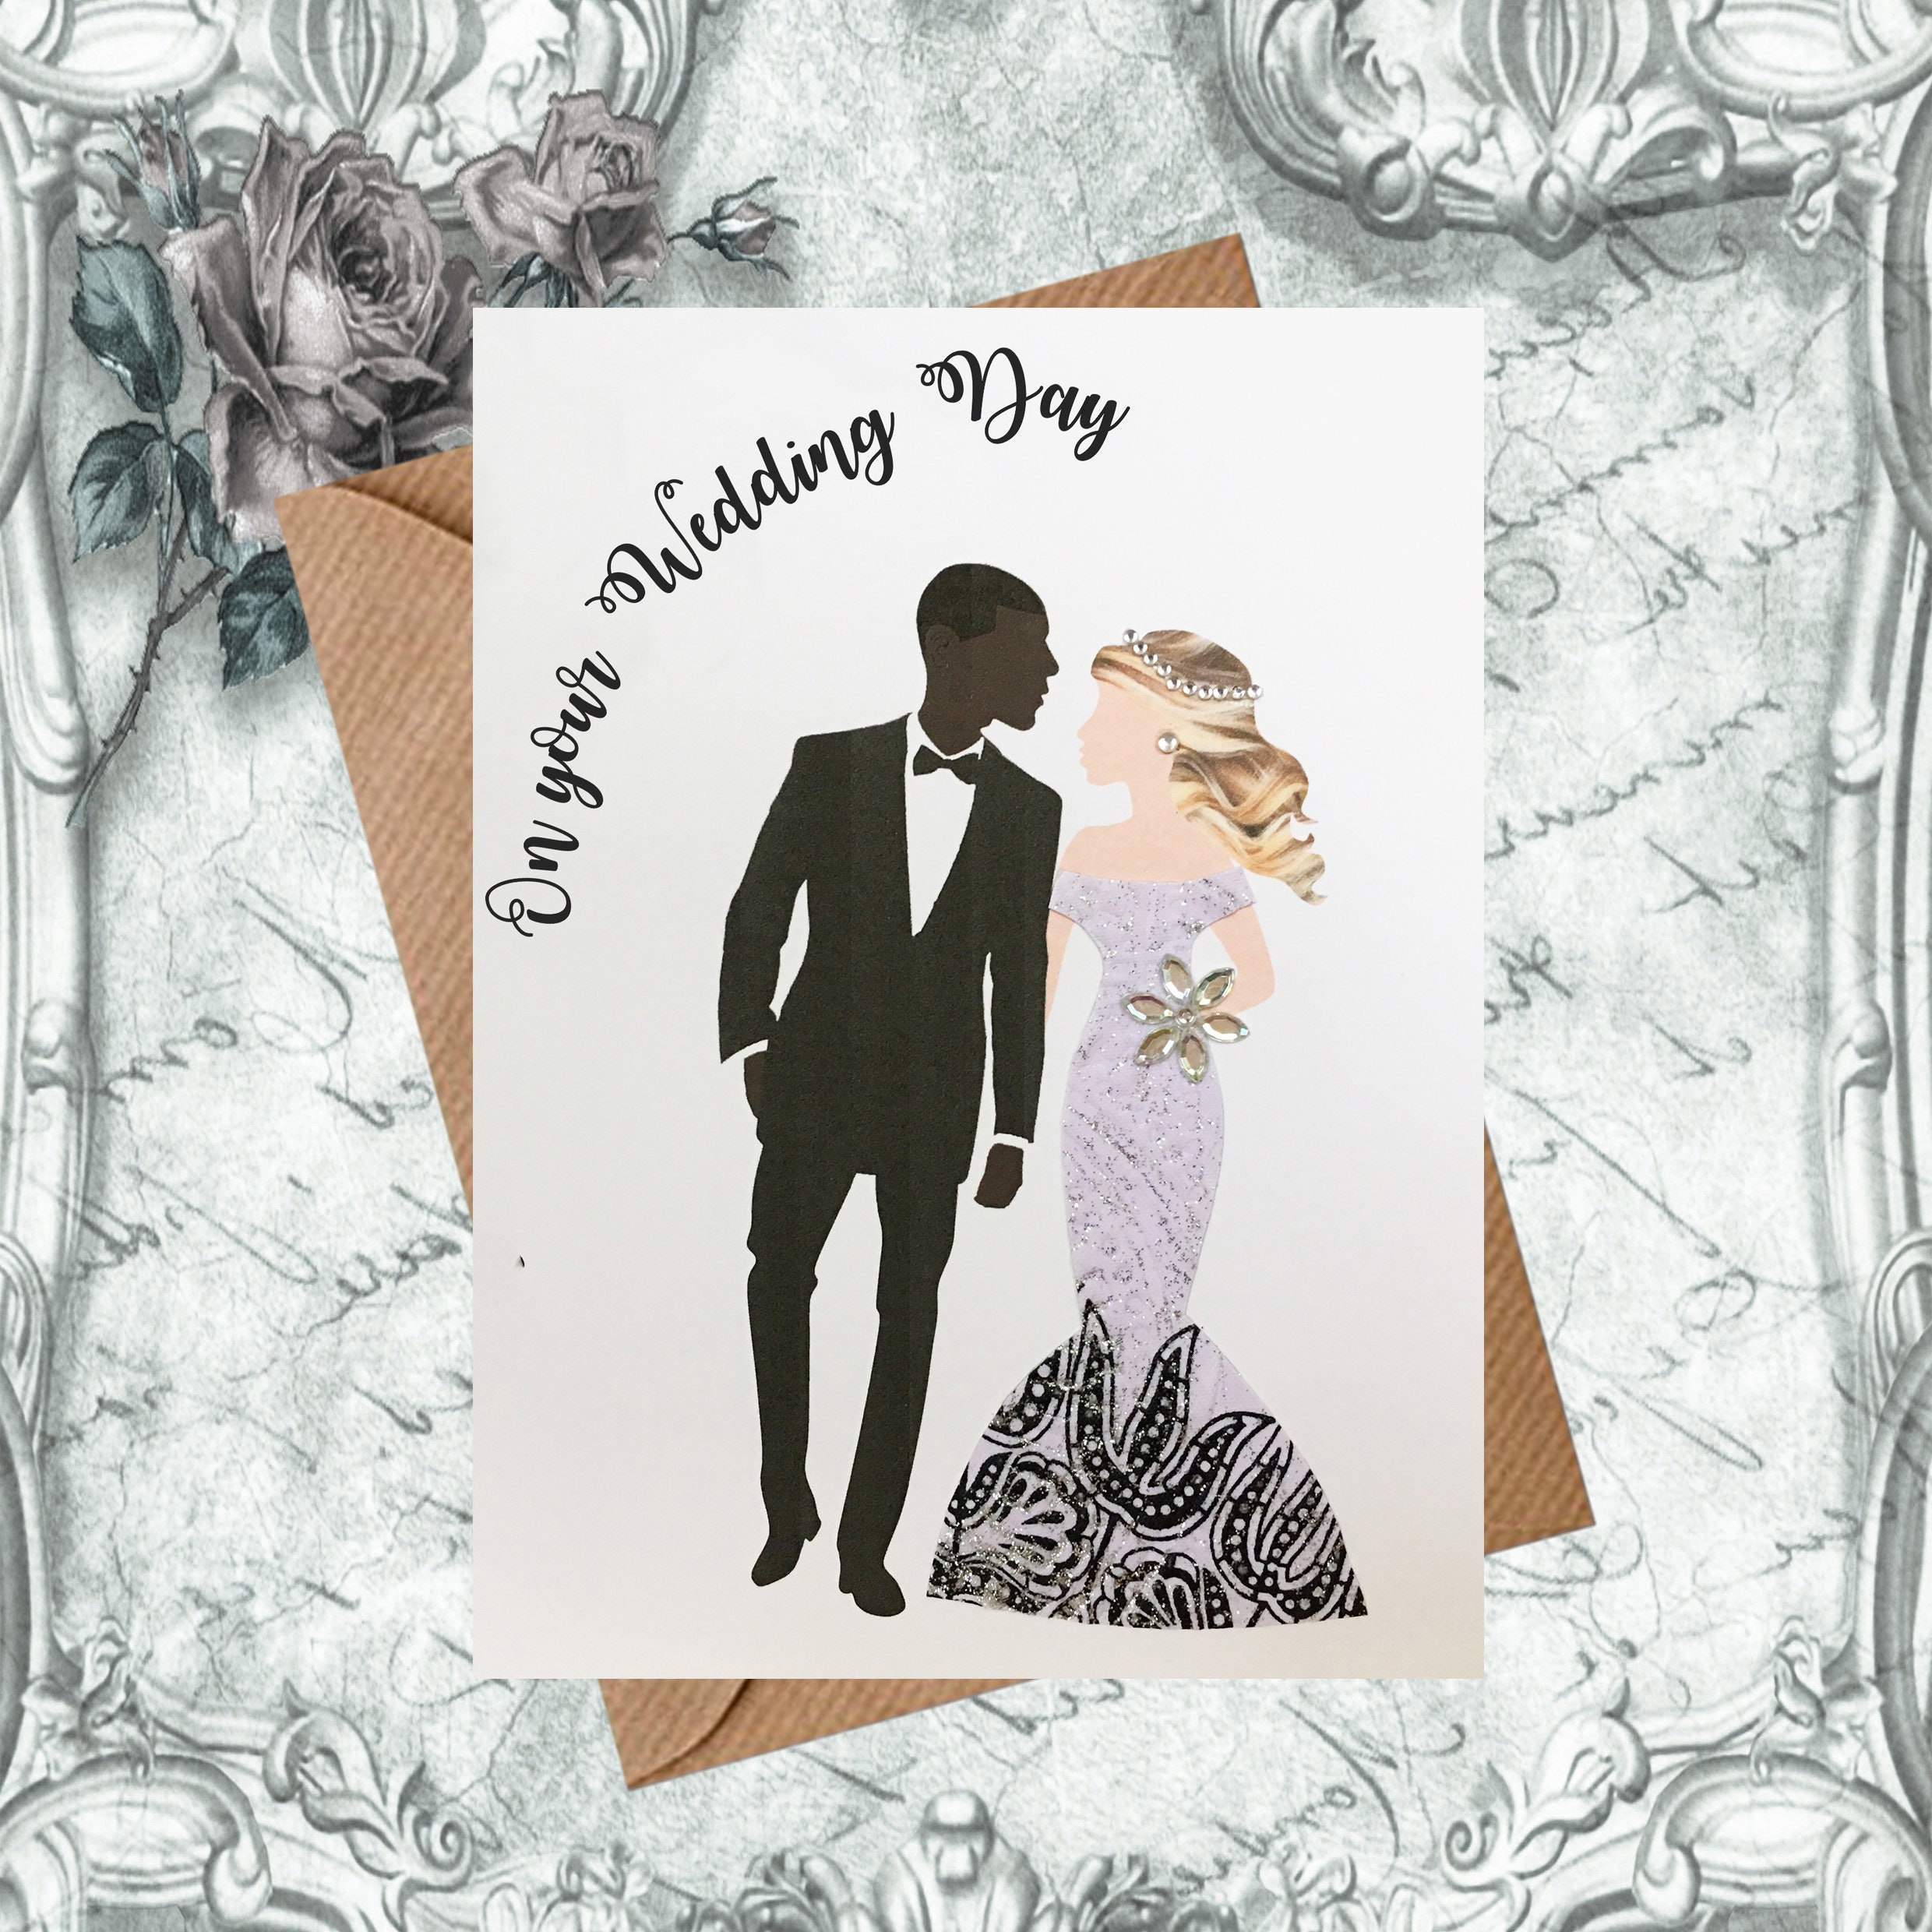 Interracial Wedding Cards Black Man White Woman Mixed image